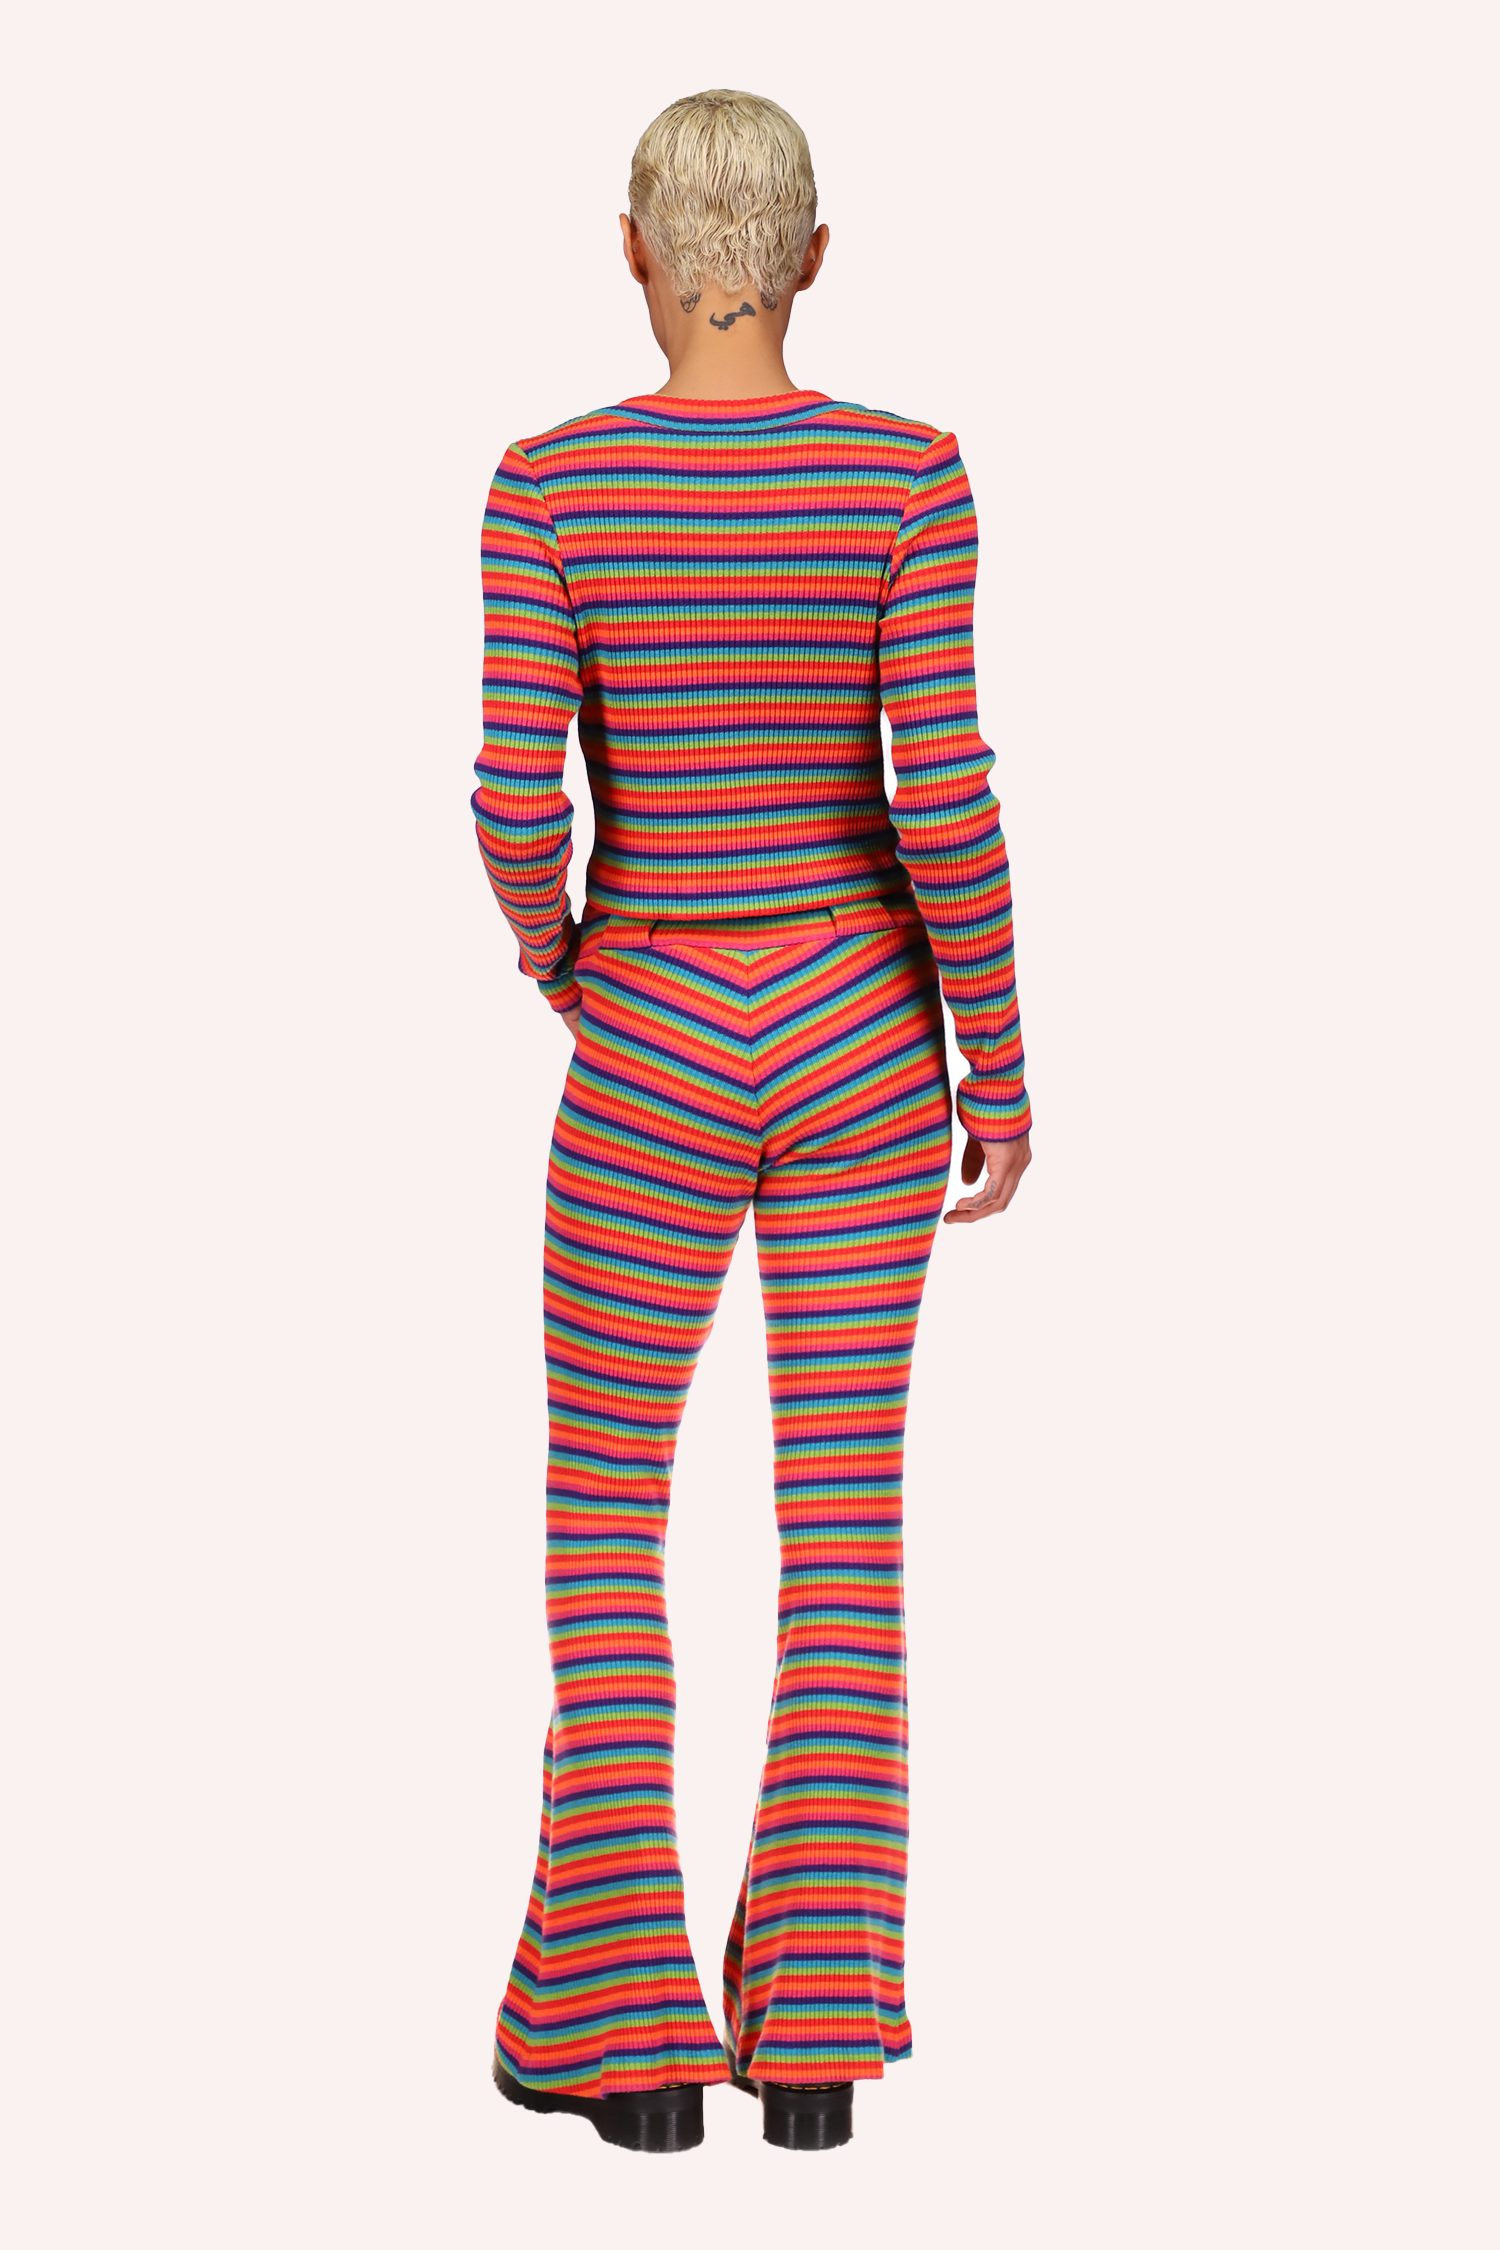 Sweater, repetitive lines top/bottom of, dark blue, light blue, green, orange, light orange, and pink